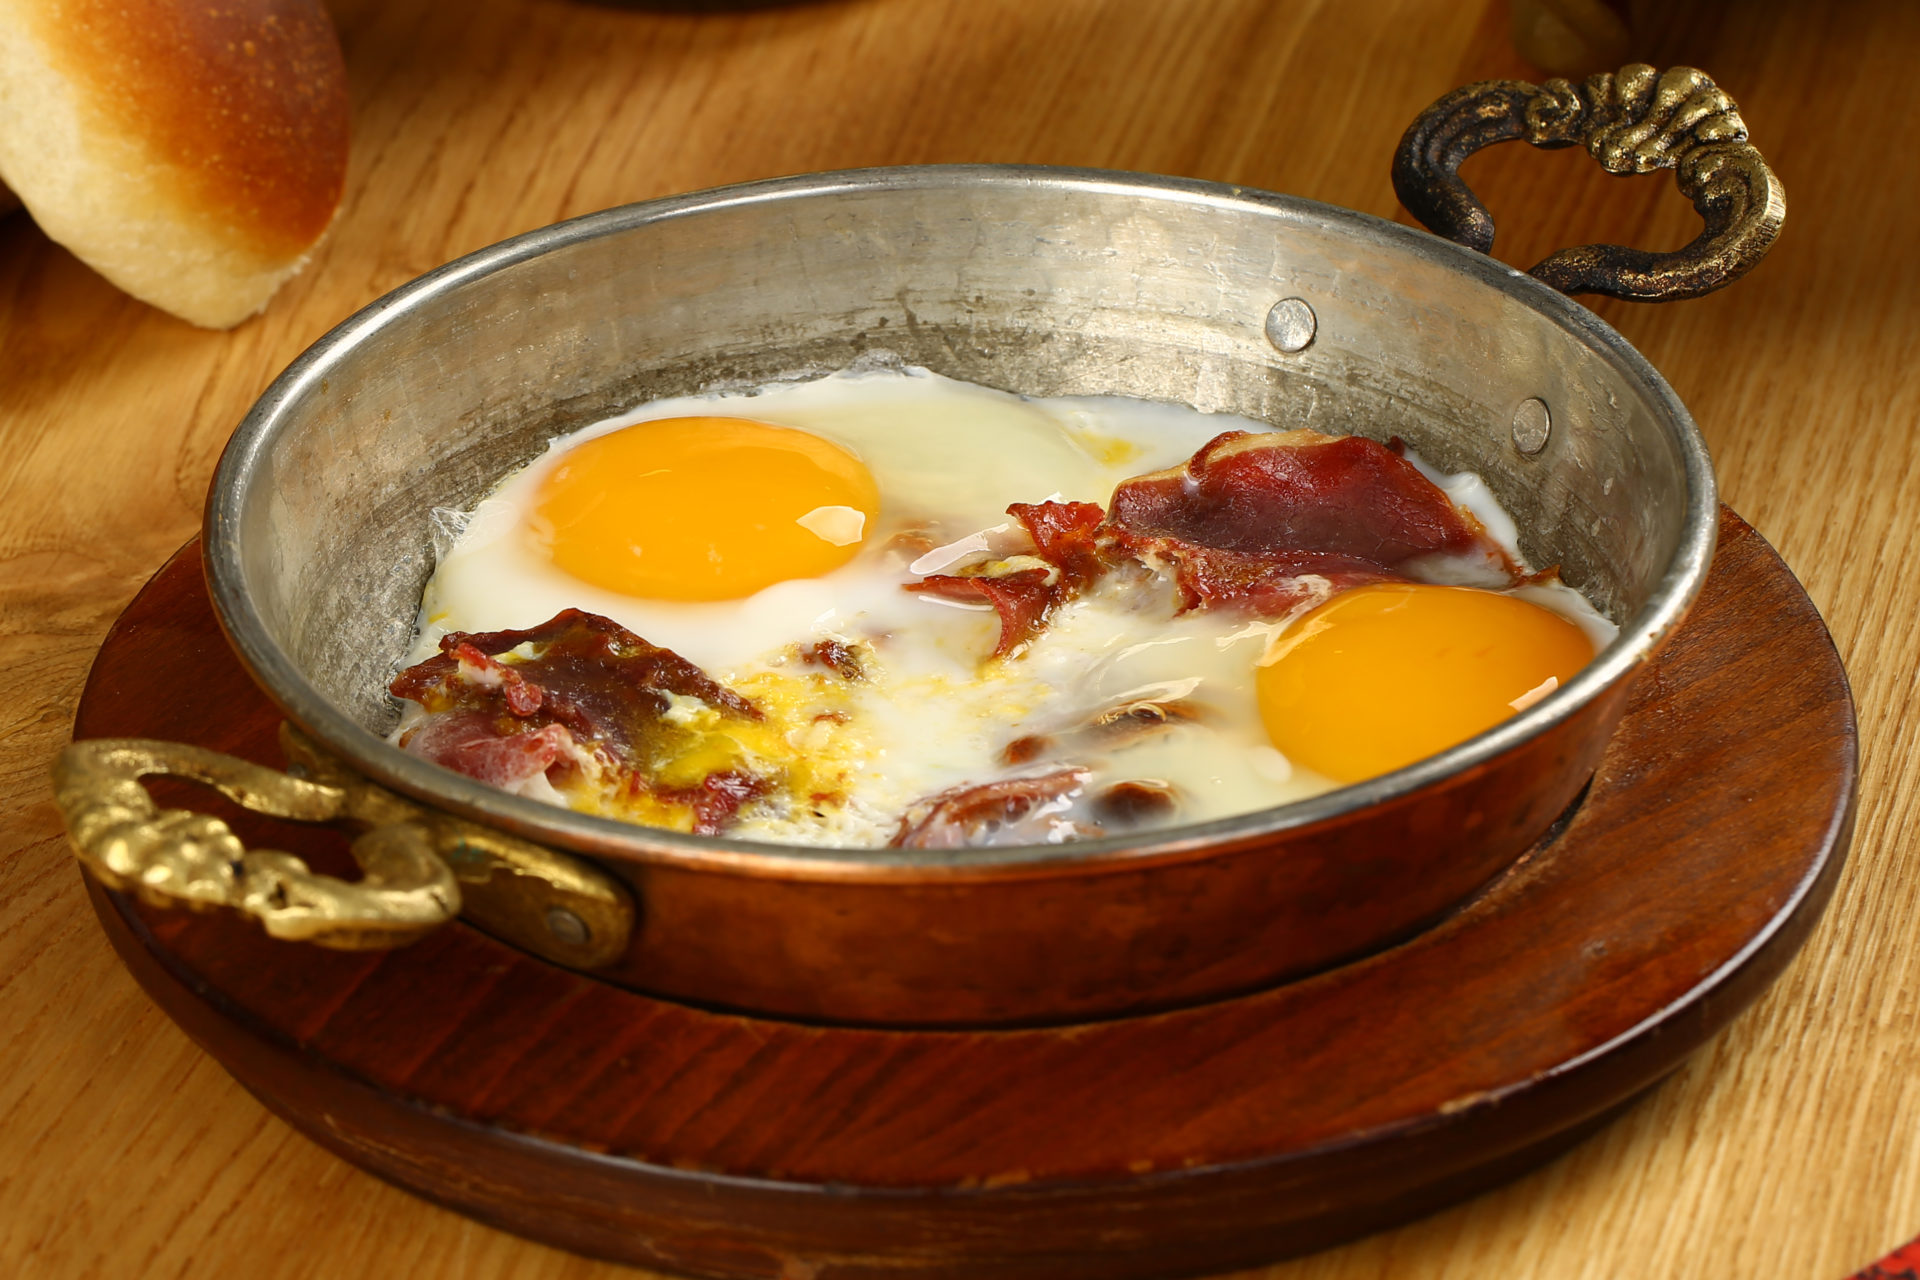 Saganaki with pastourma and eggs